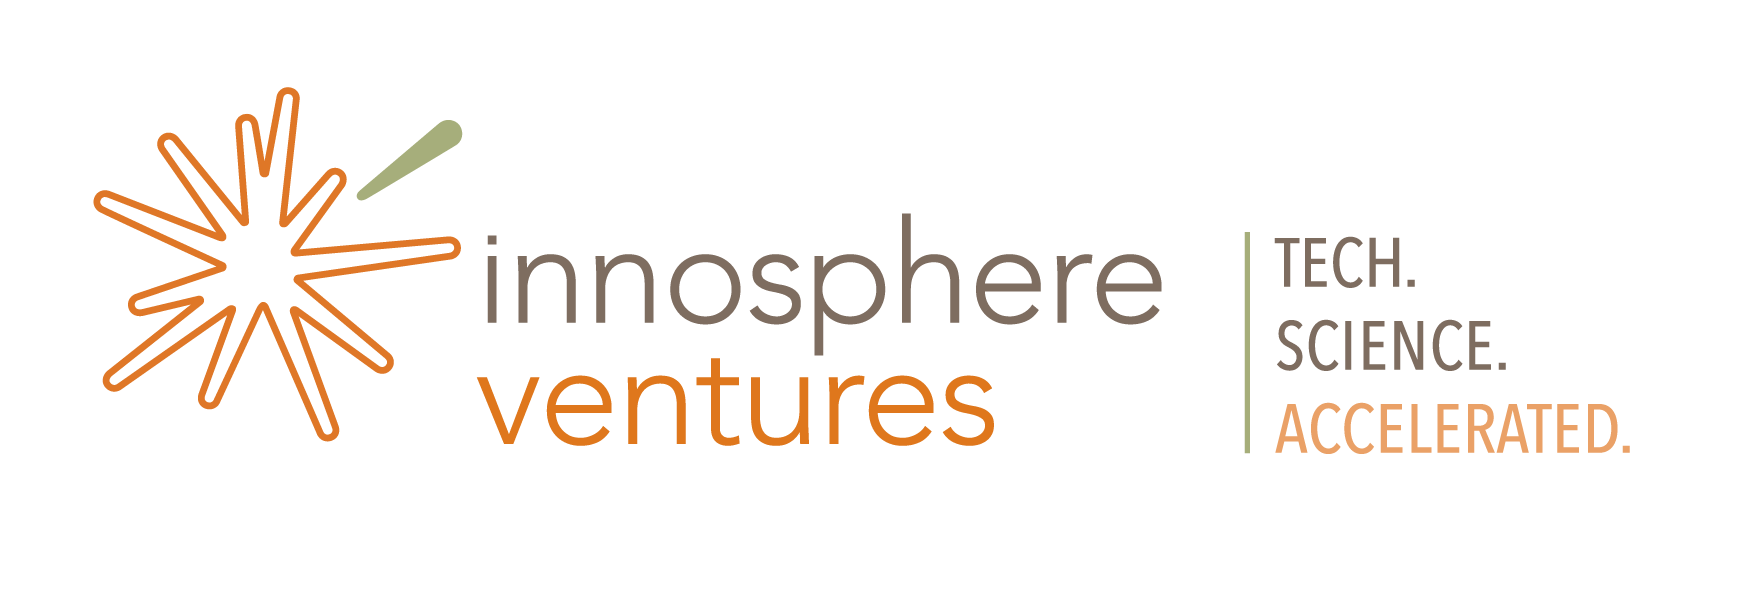 About Innosphere Ventures 